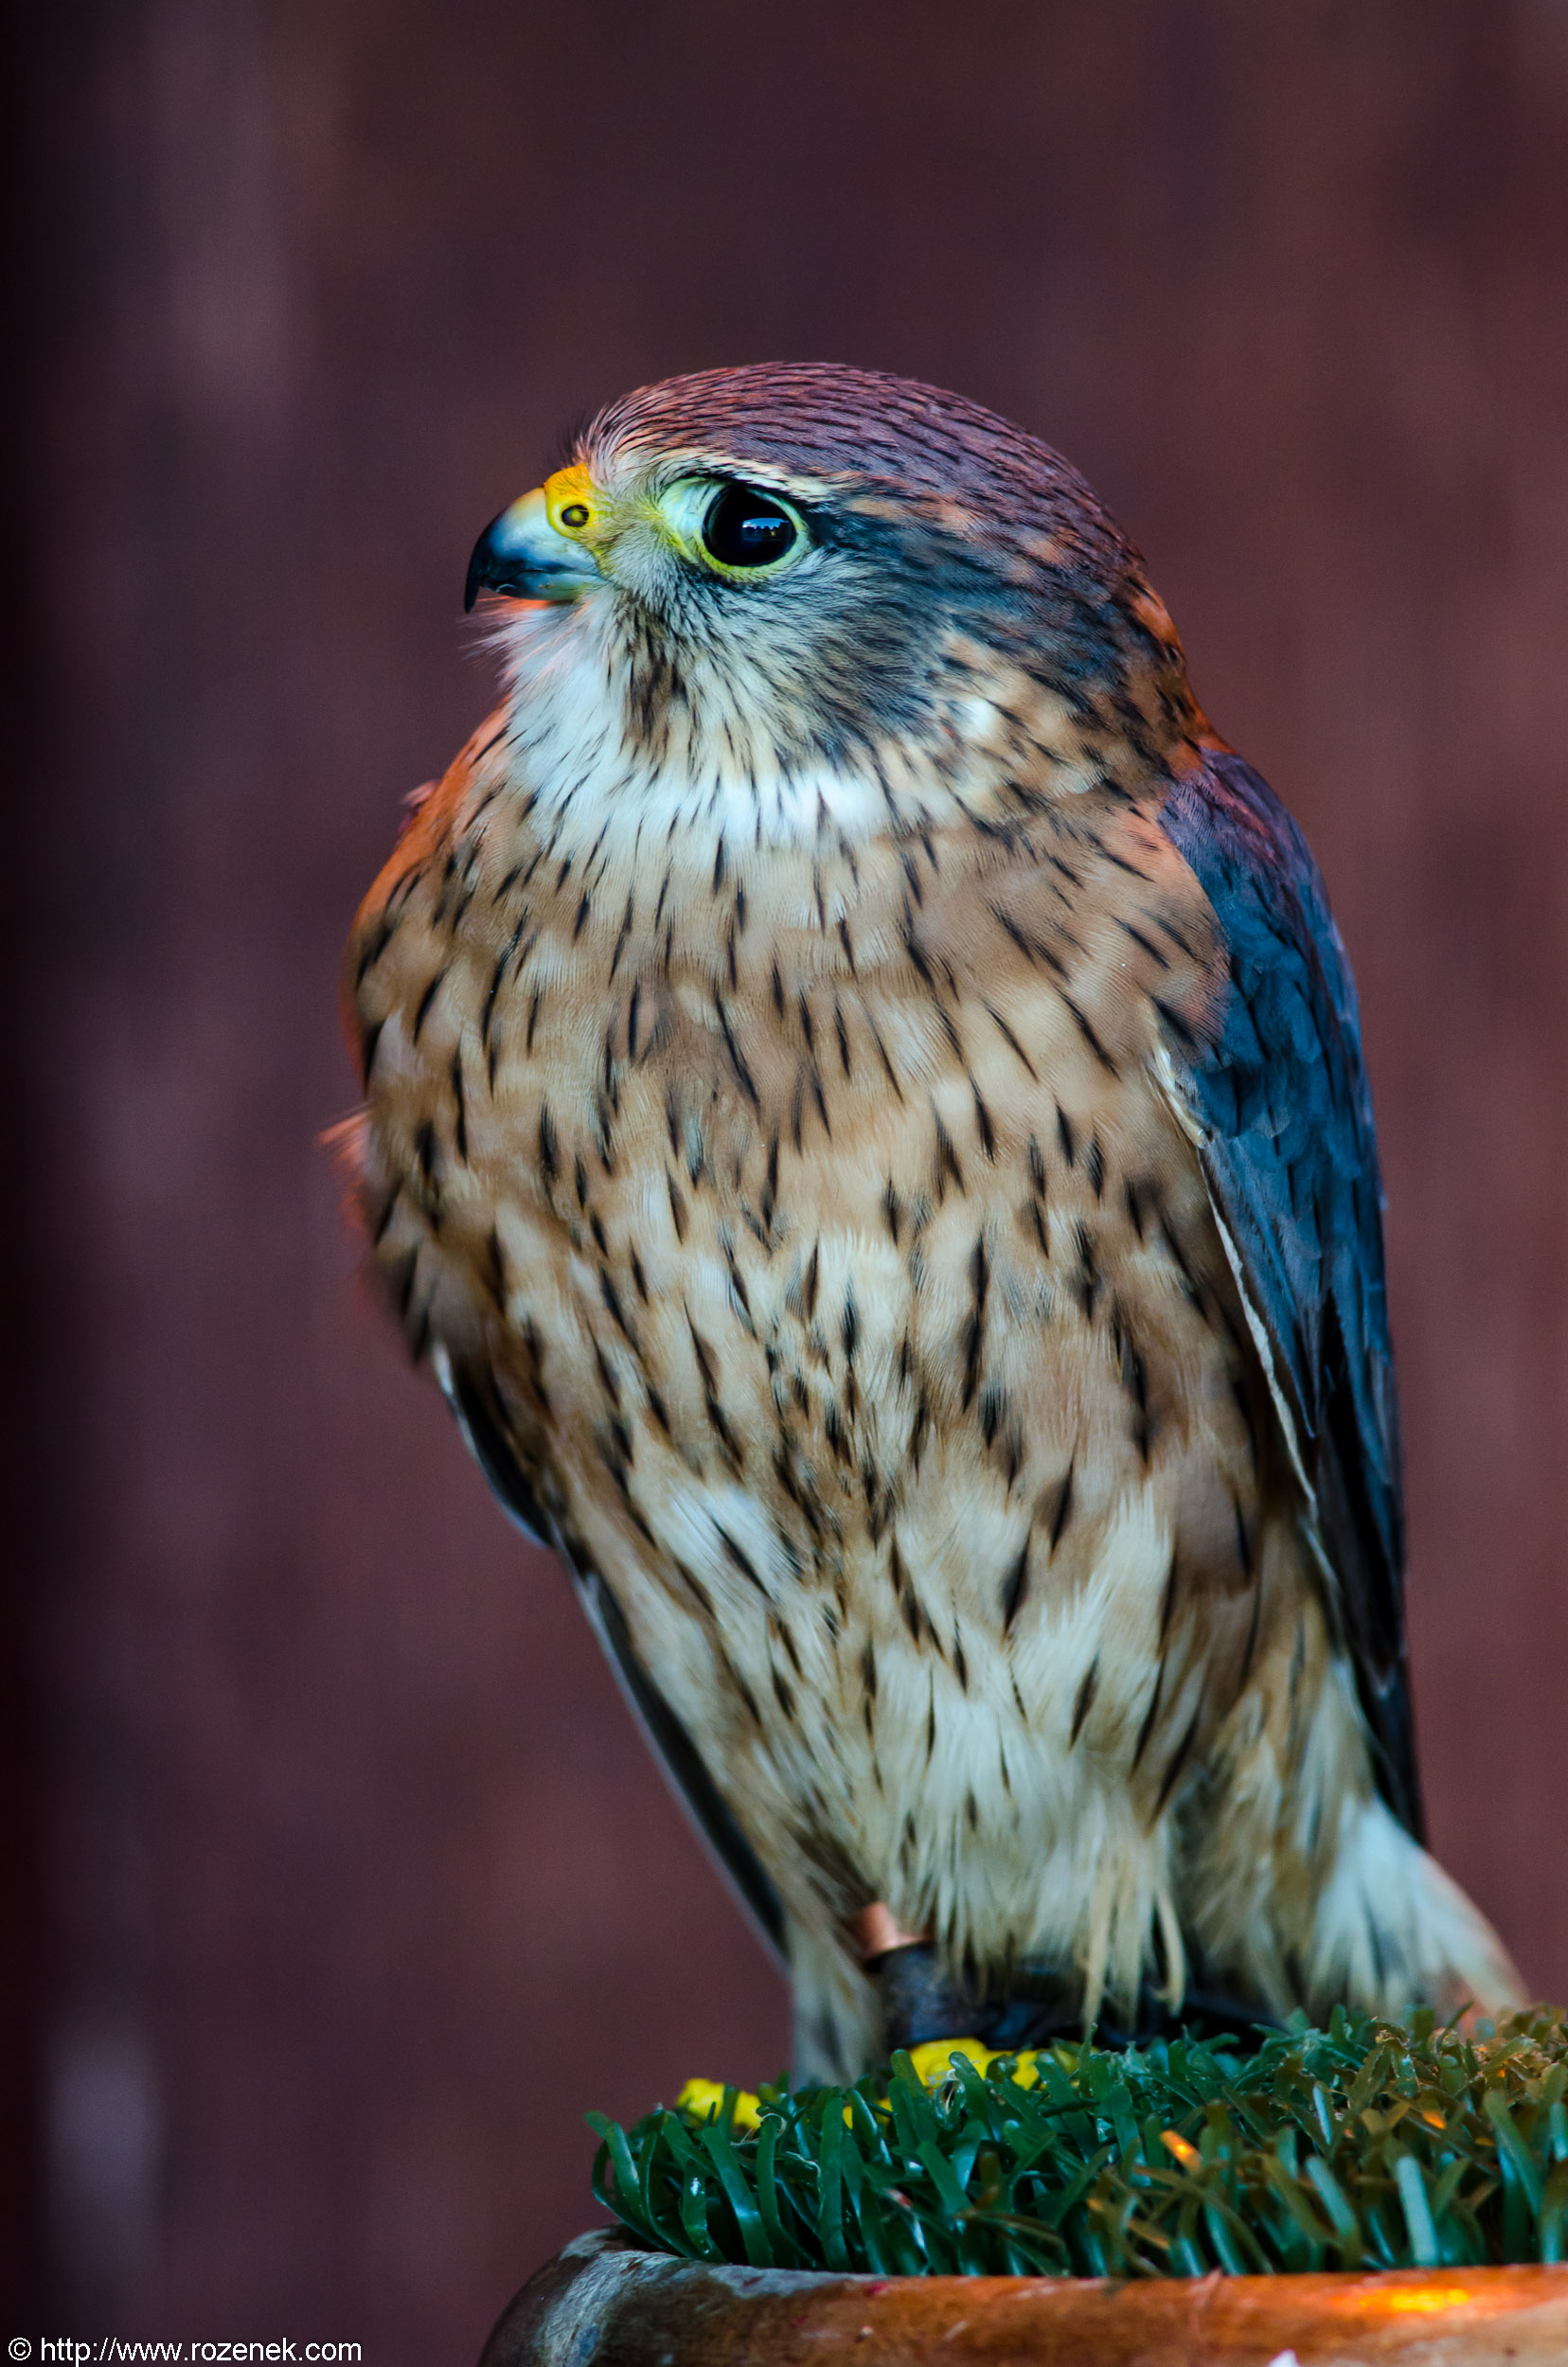 Merlin bird